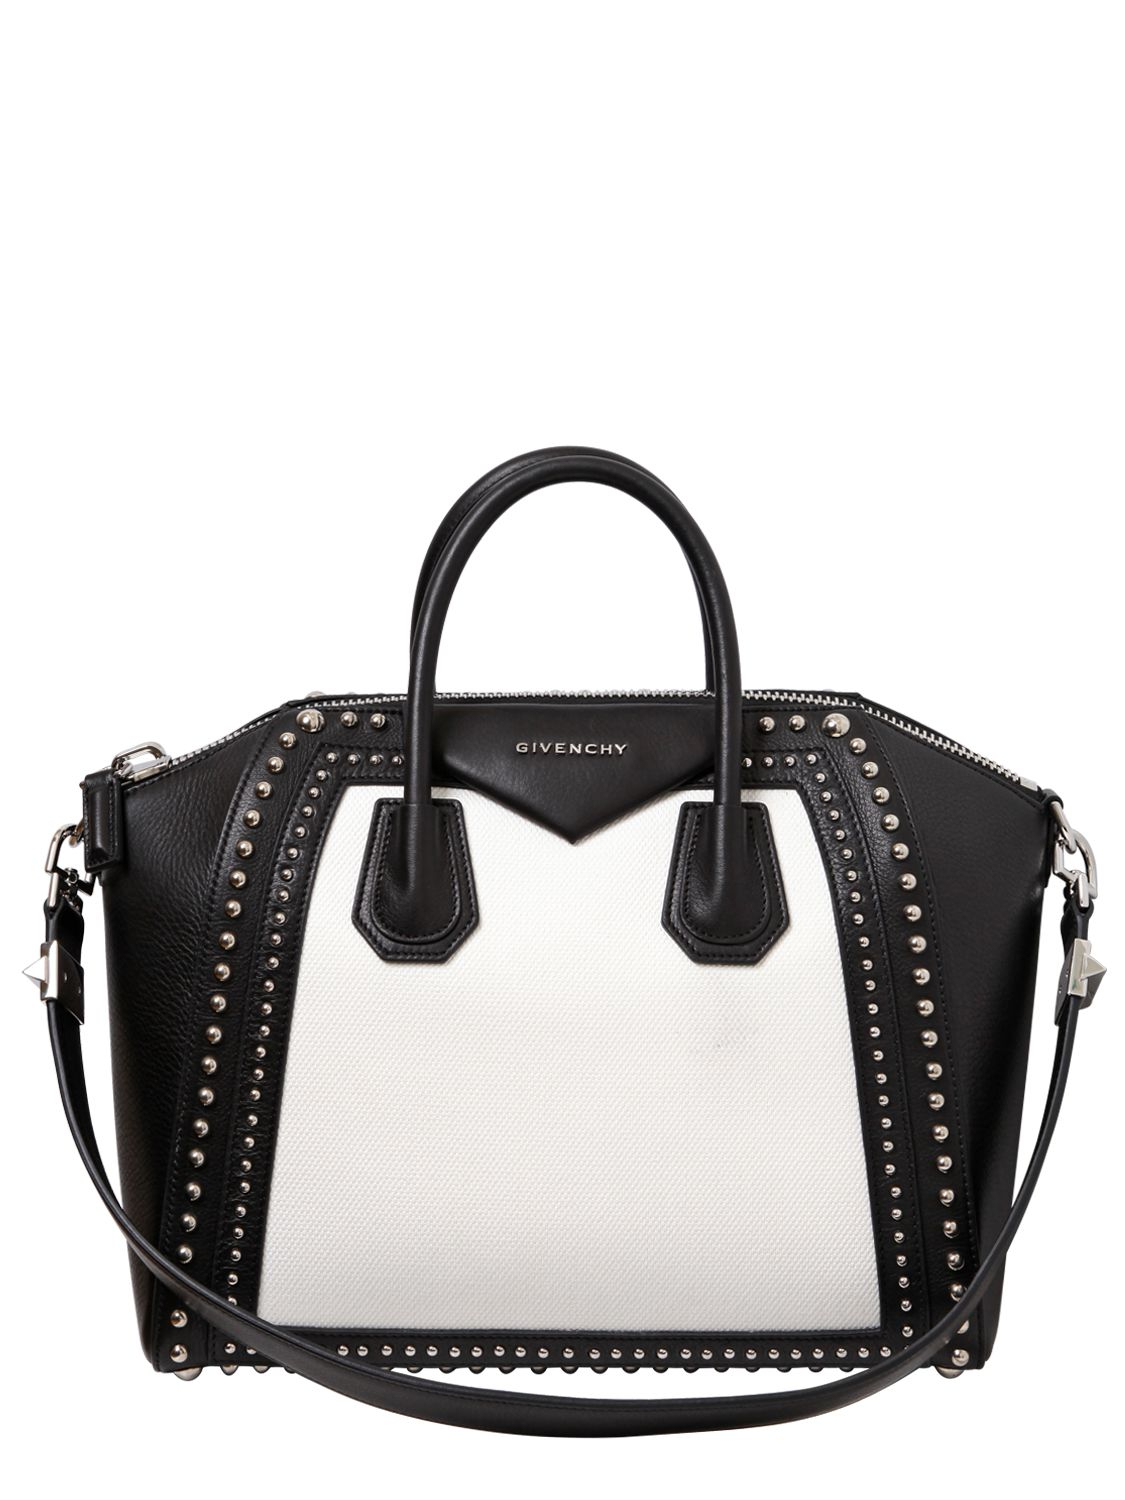 Givenchy Medium Antigona Studded Leather Bag in Black/White (White) - Lyst